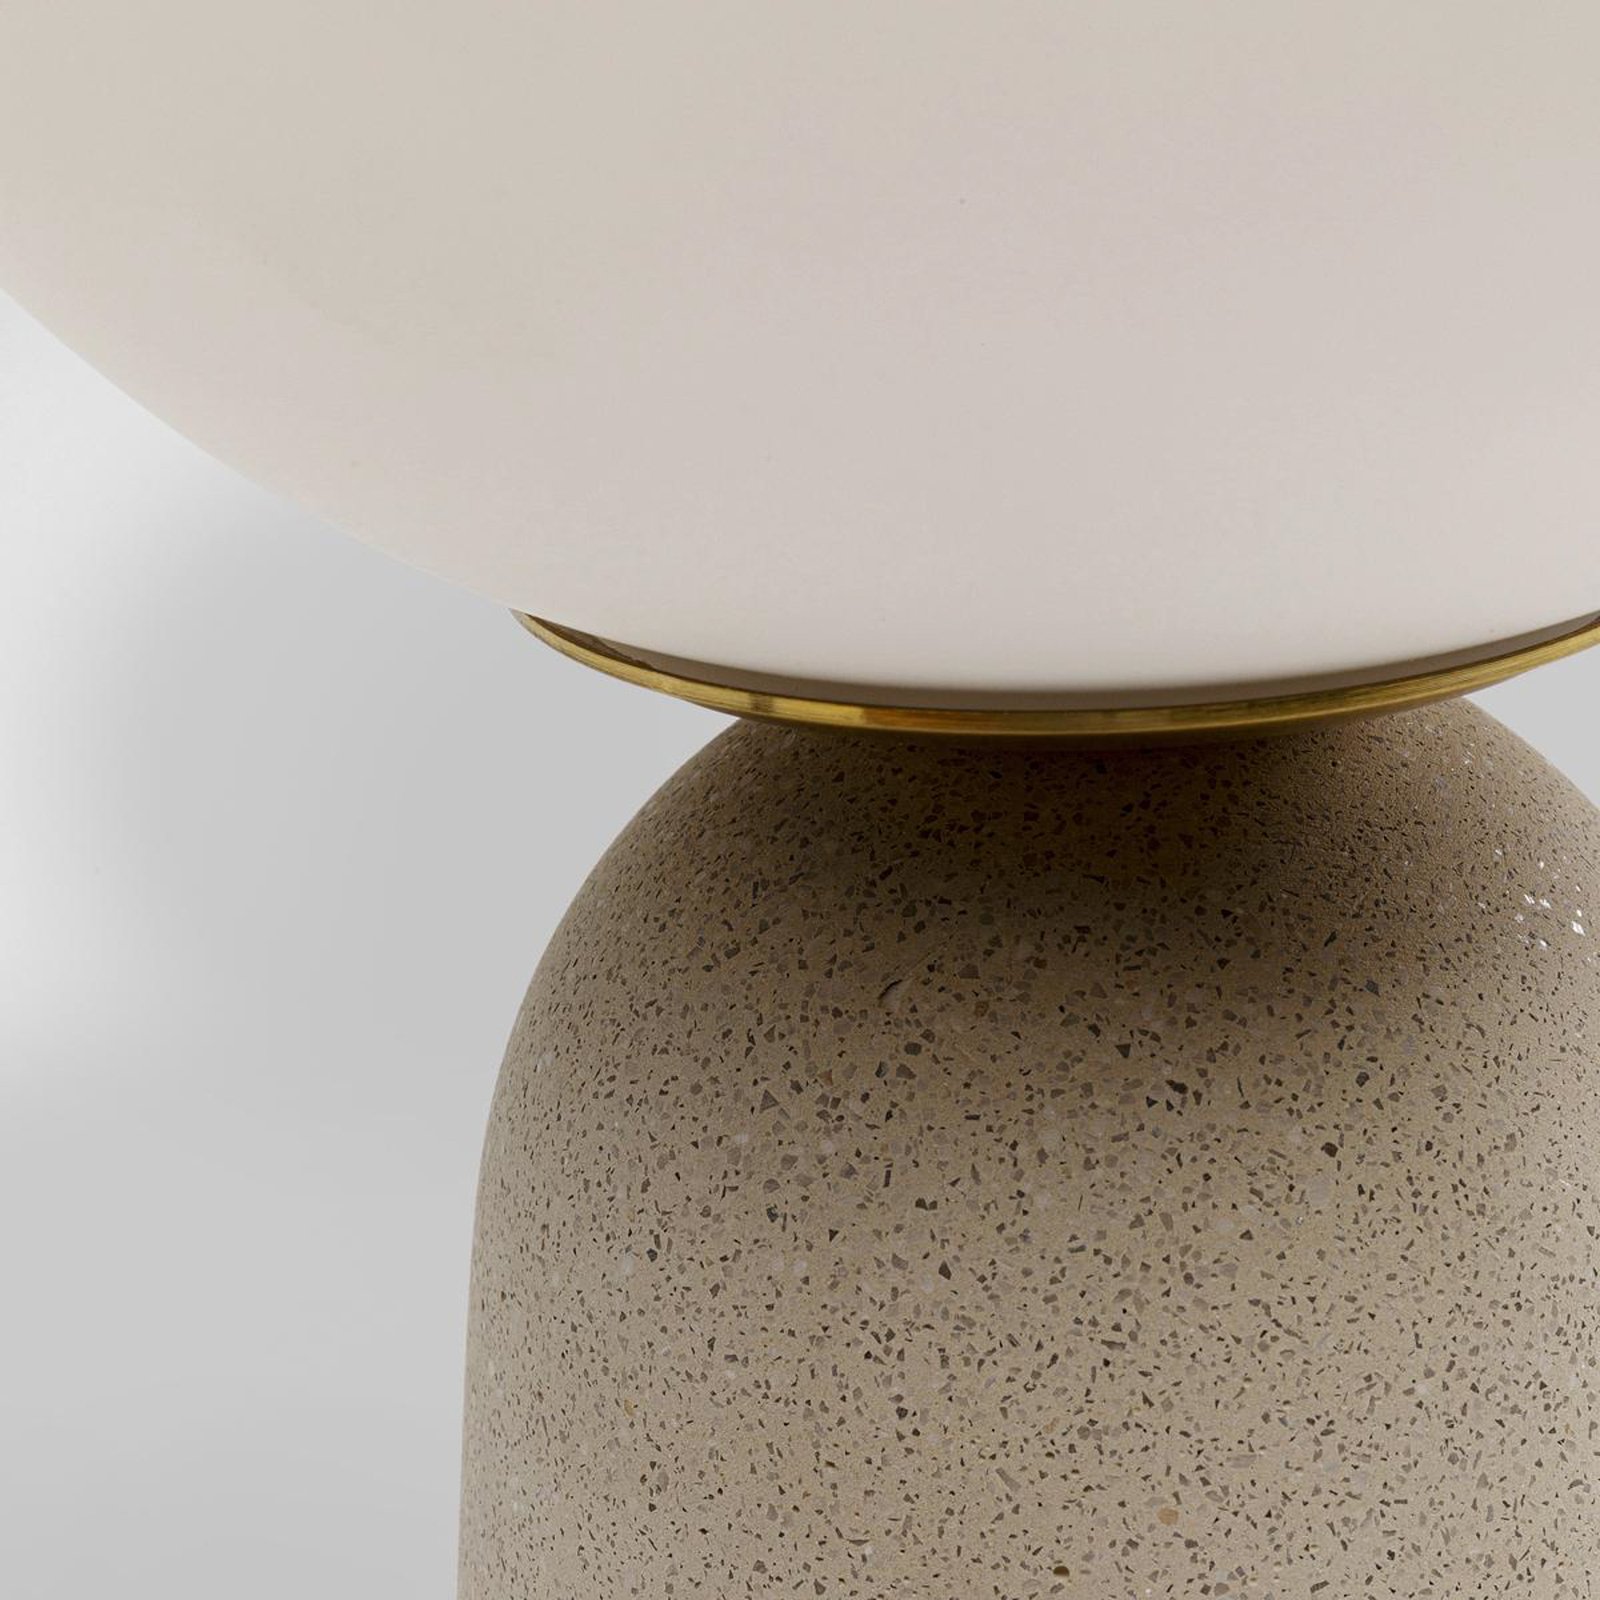 Kare lámpara de mesa Bollie, base de hormigón beige, cristal opal altura